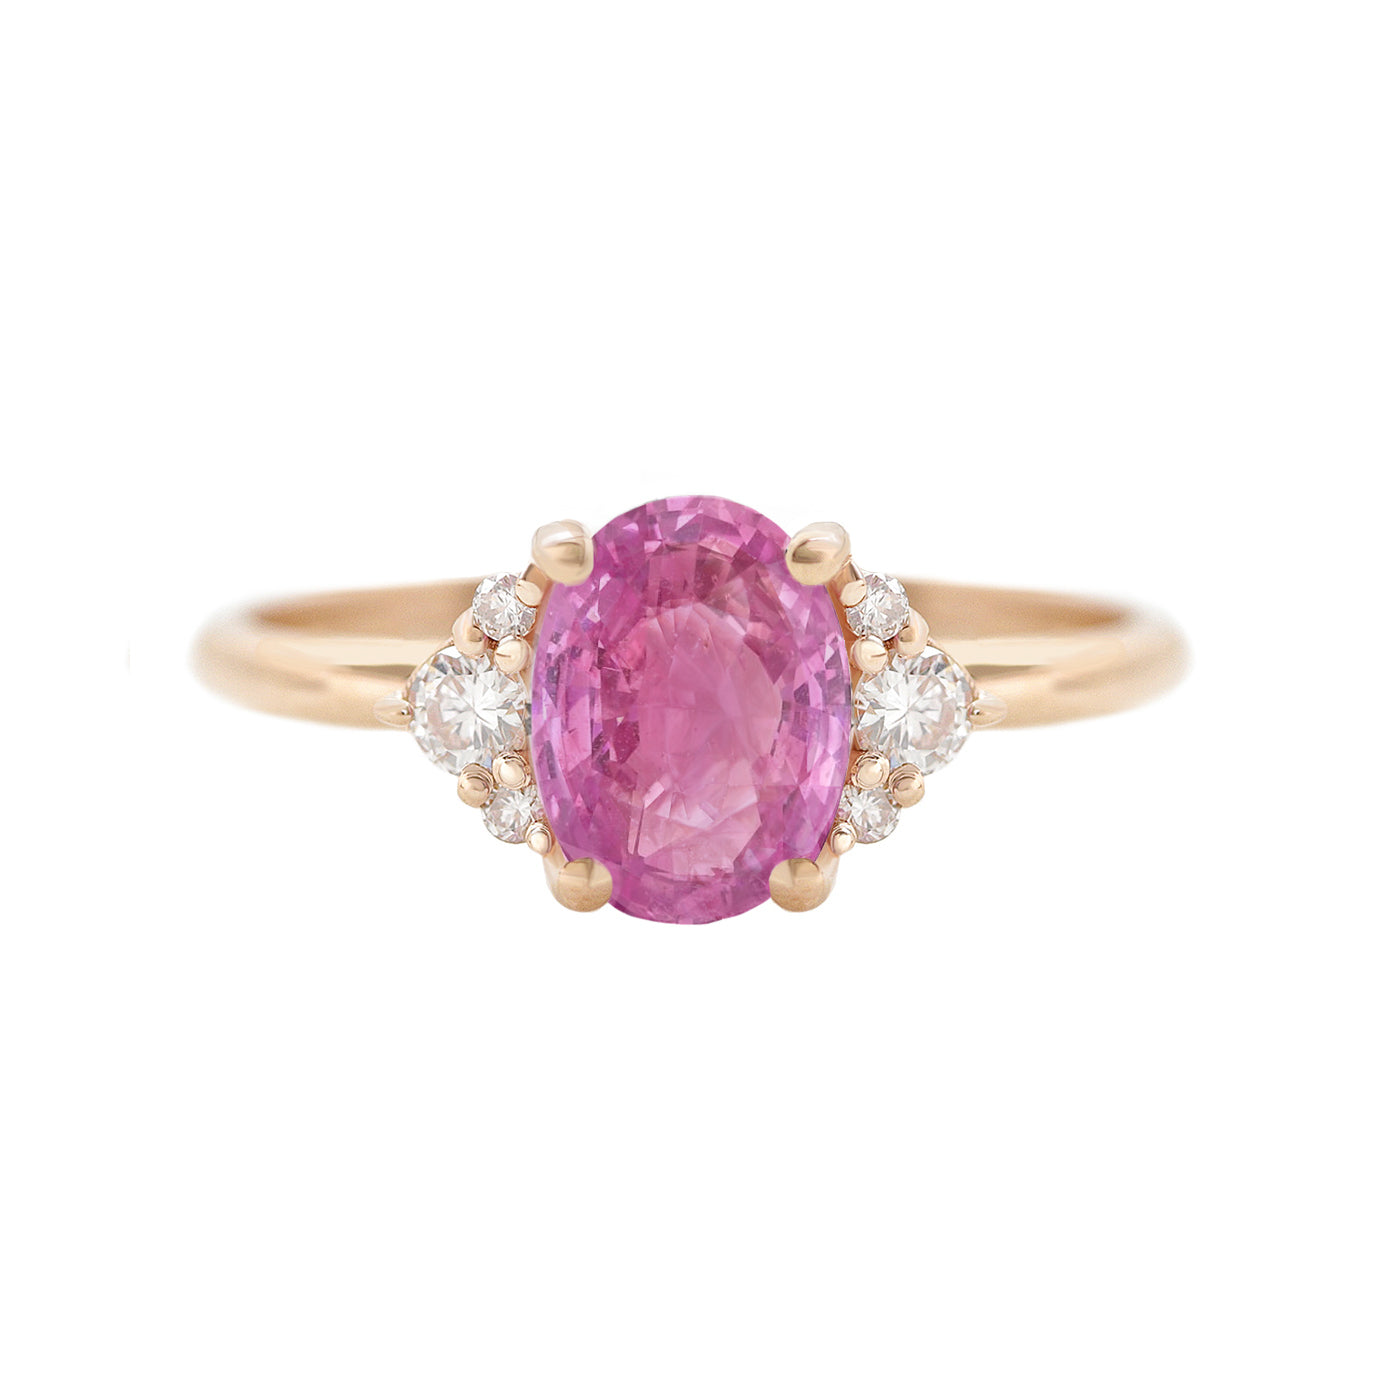 Oval vivid pink sapphire & diamonds ring, rose gold, “Isabella” . RTS